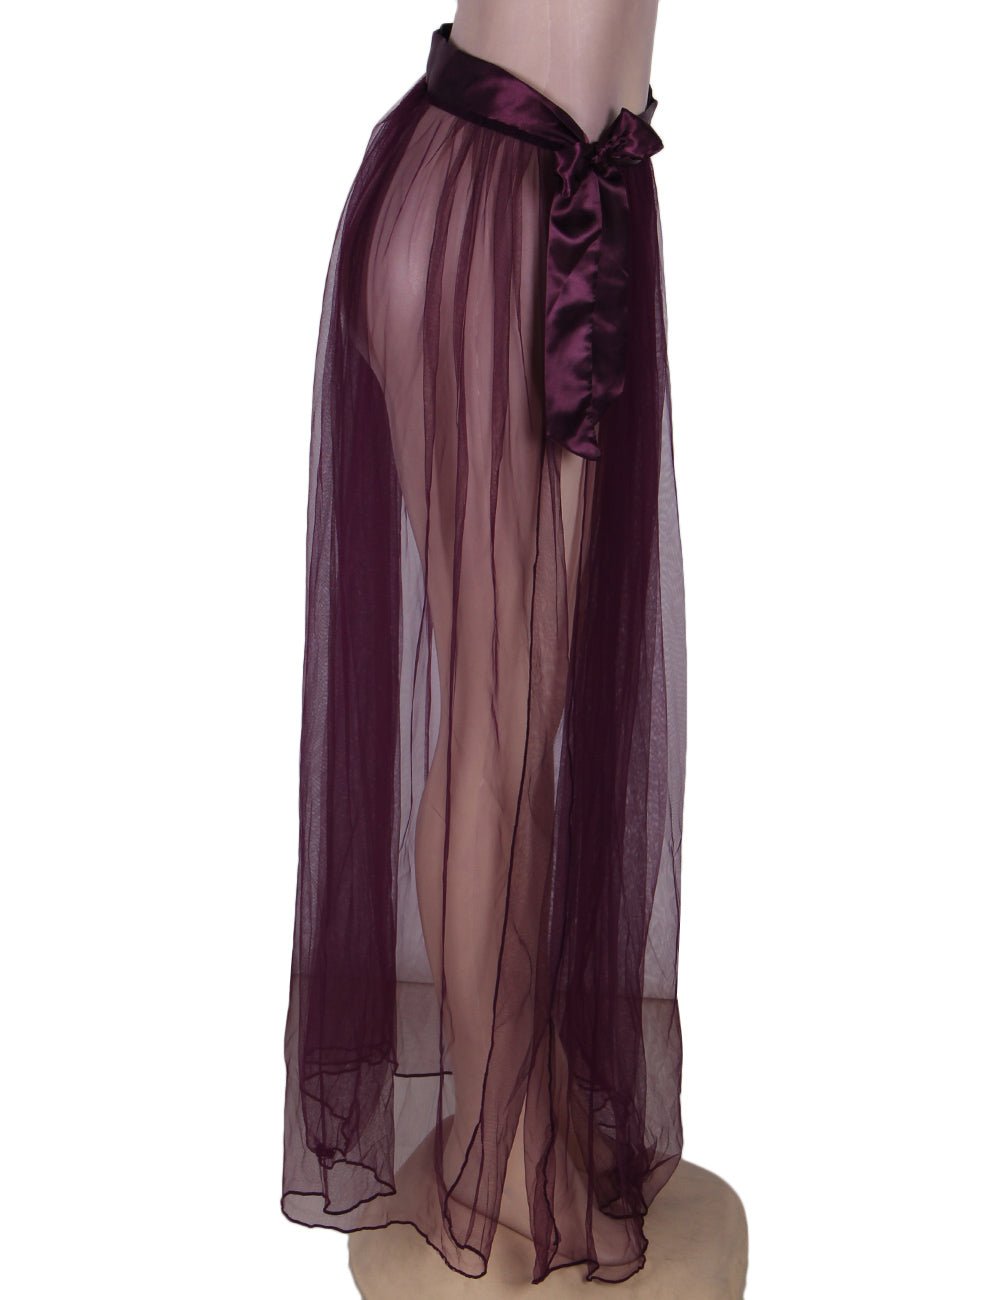 Purple Plus Size Dignity Transparent Skirt - R80272P-1 - Love it Curvy